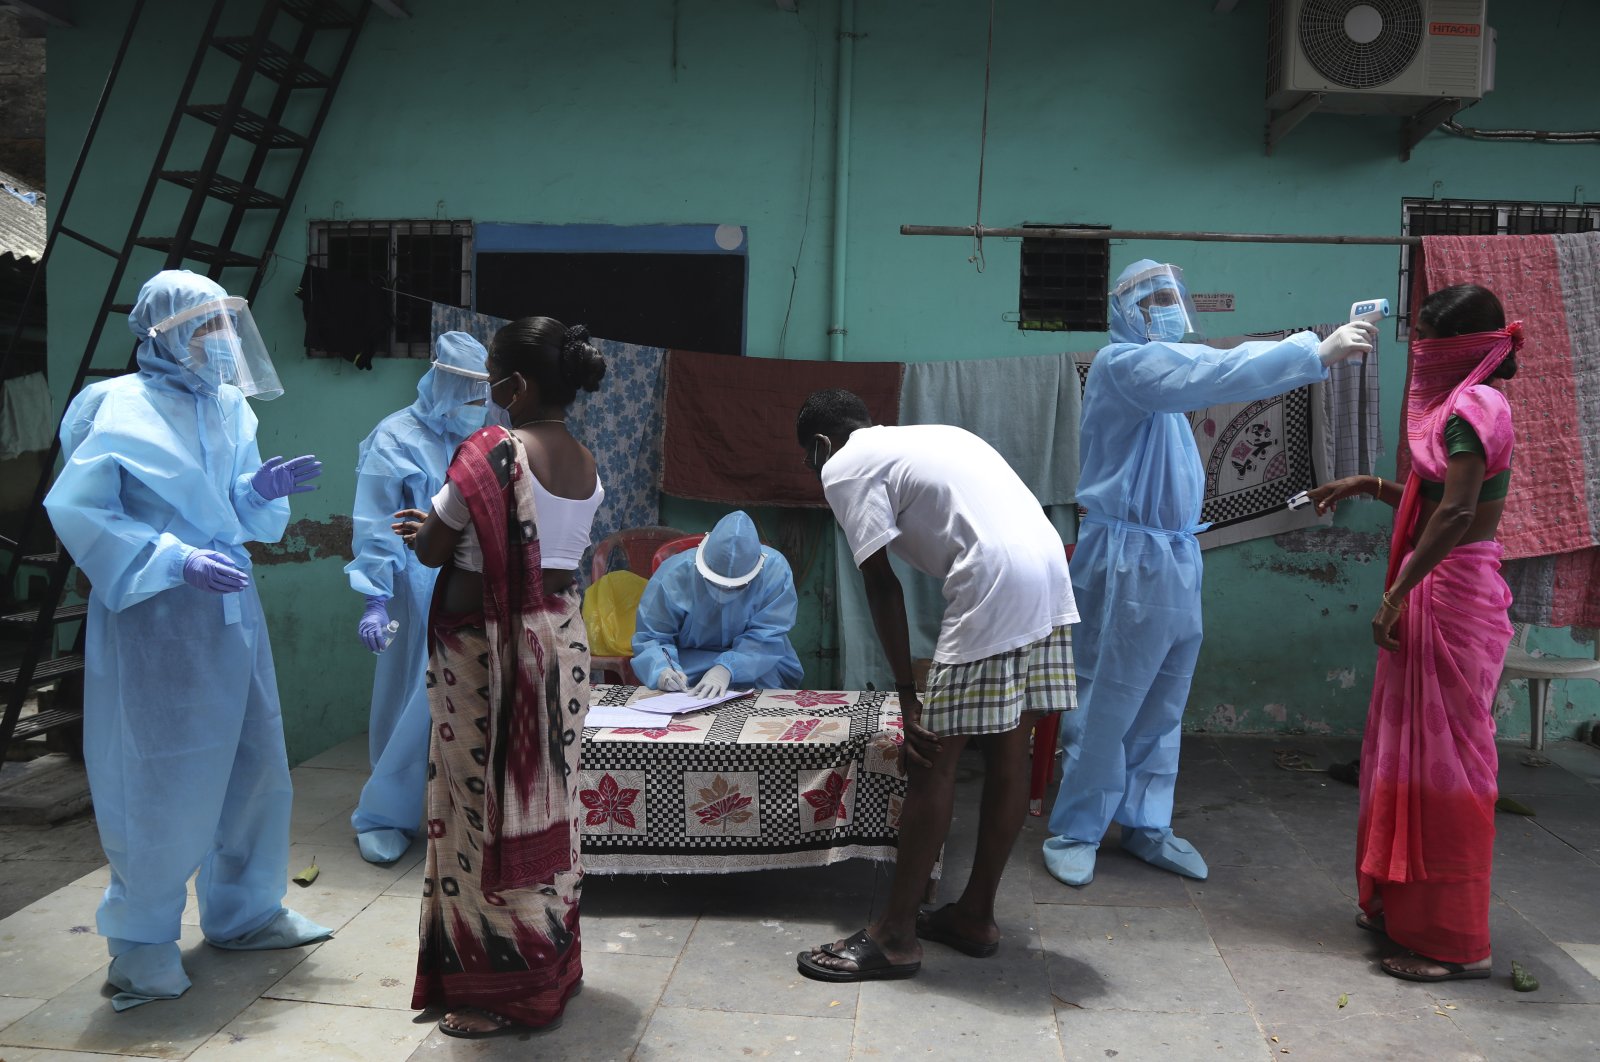 Doctors examine people during a free medical camp, Dharavi, Mumbai, India, June 7, 2020. (AP Photo)